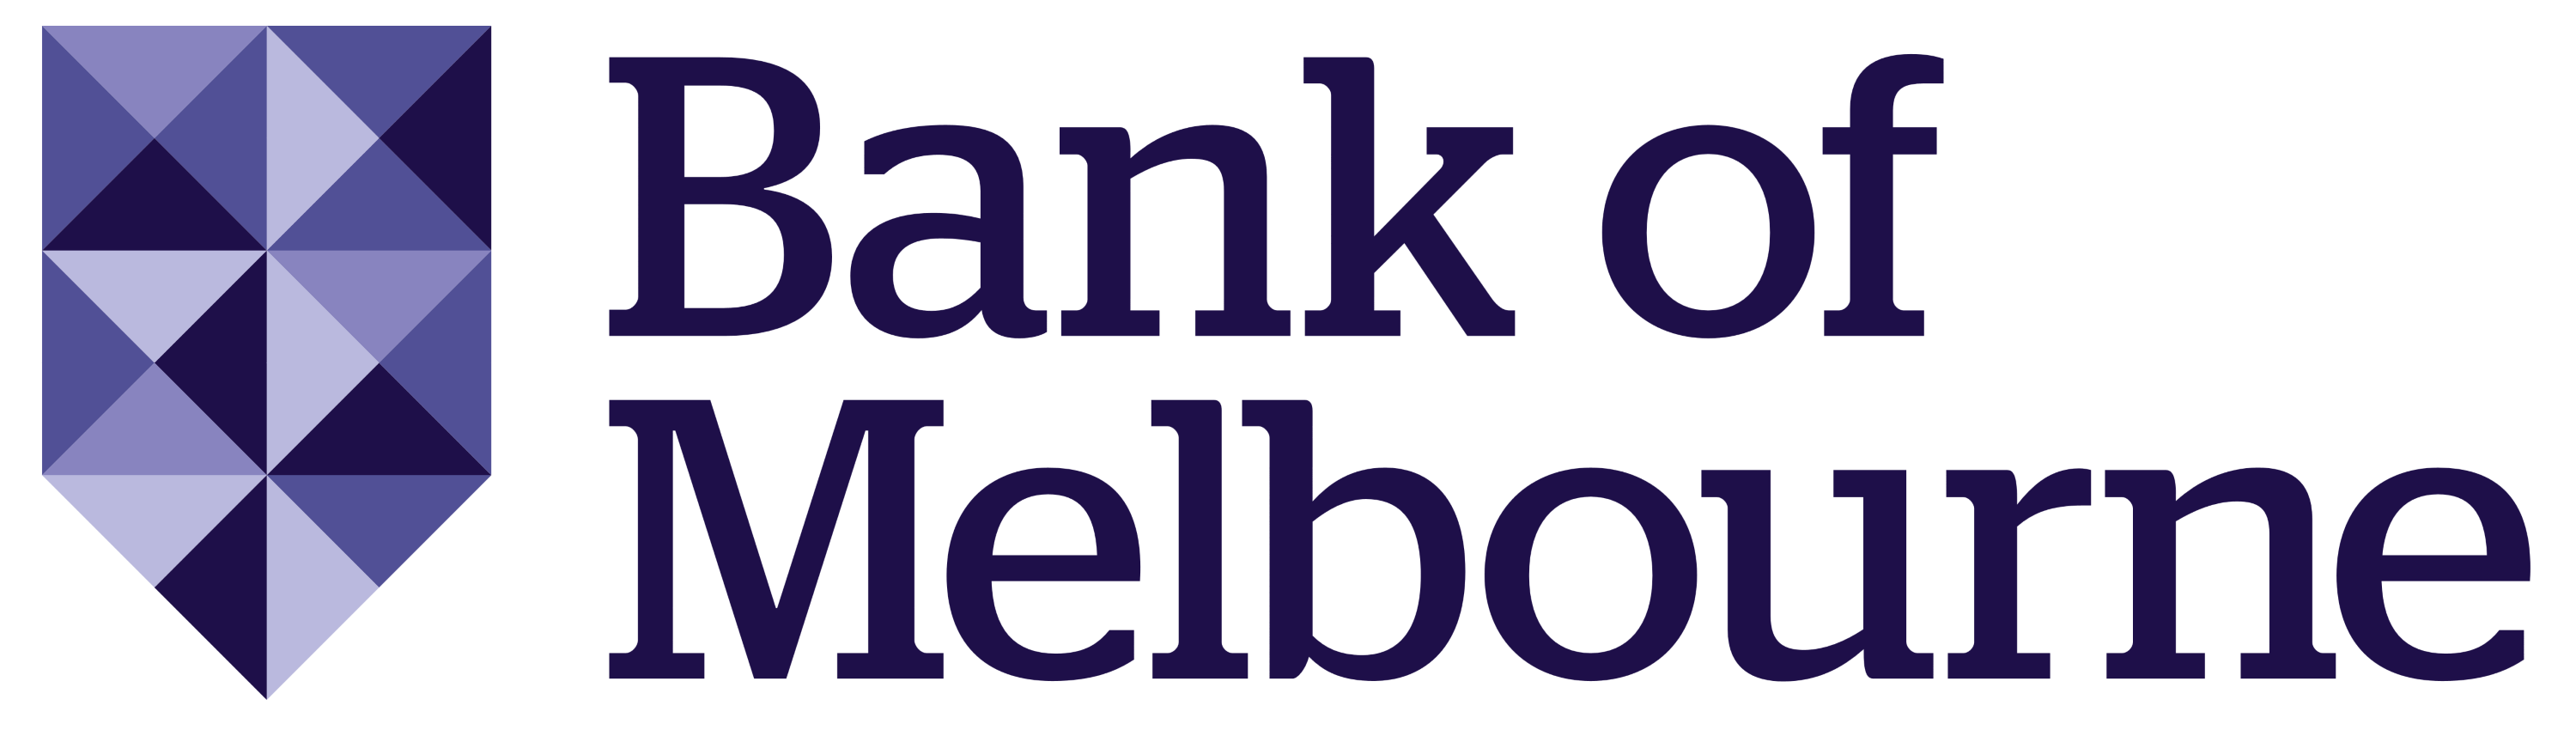 Bank of Melbourne logo, logotype